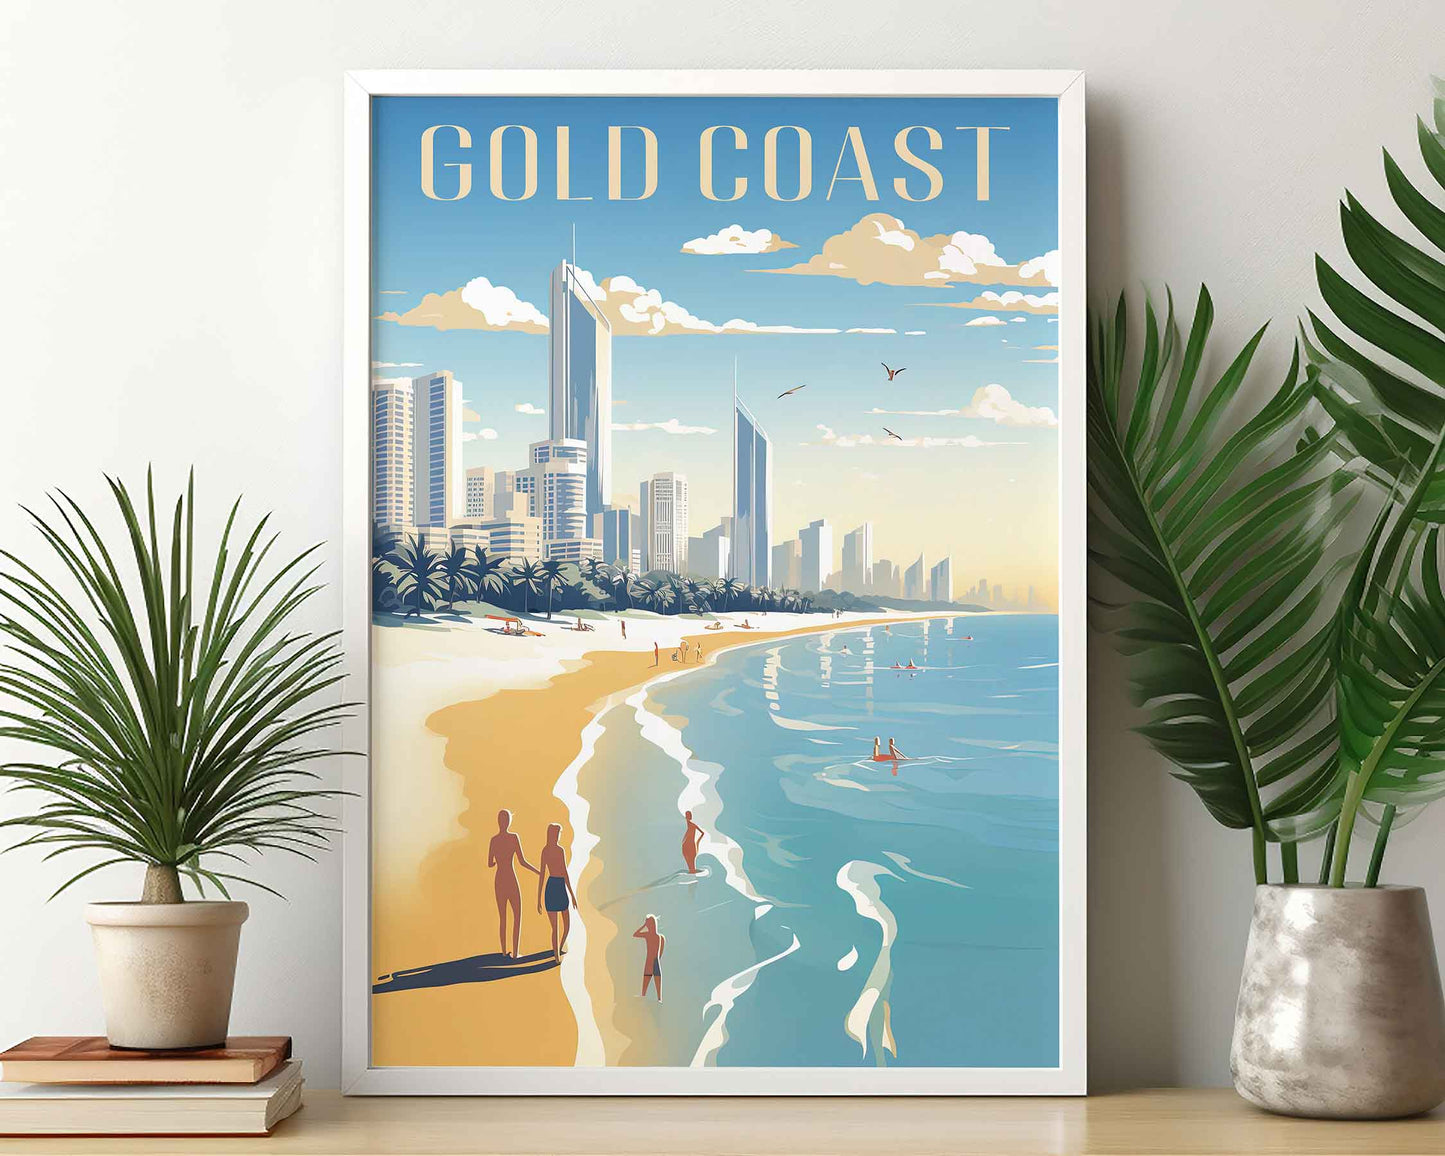 Framed Image of Gold Coast Australia Travel Poster Wall Art Prints Illustration